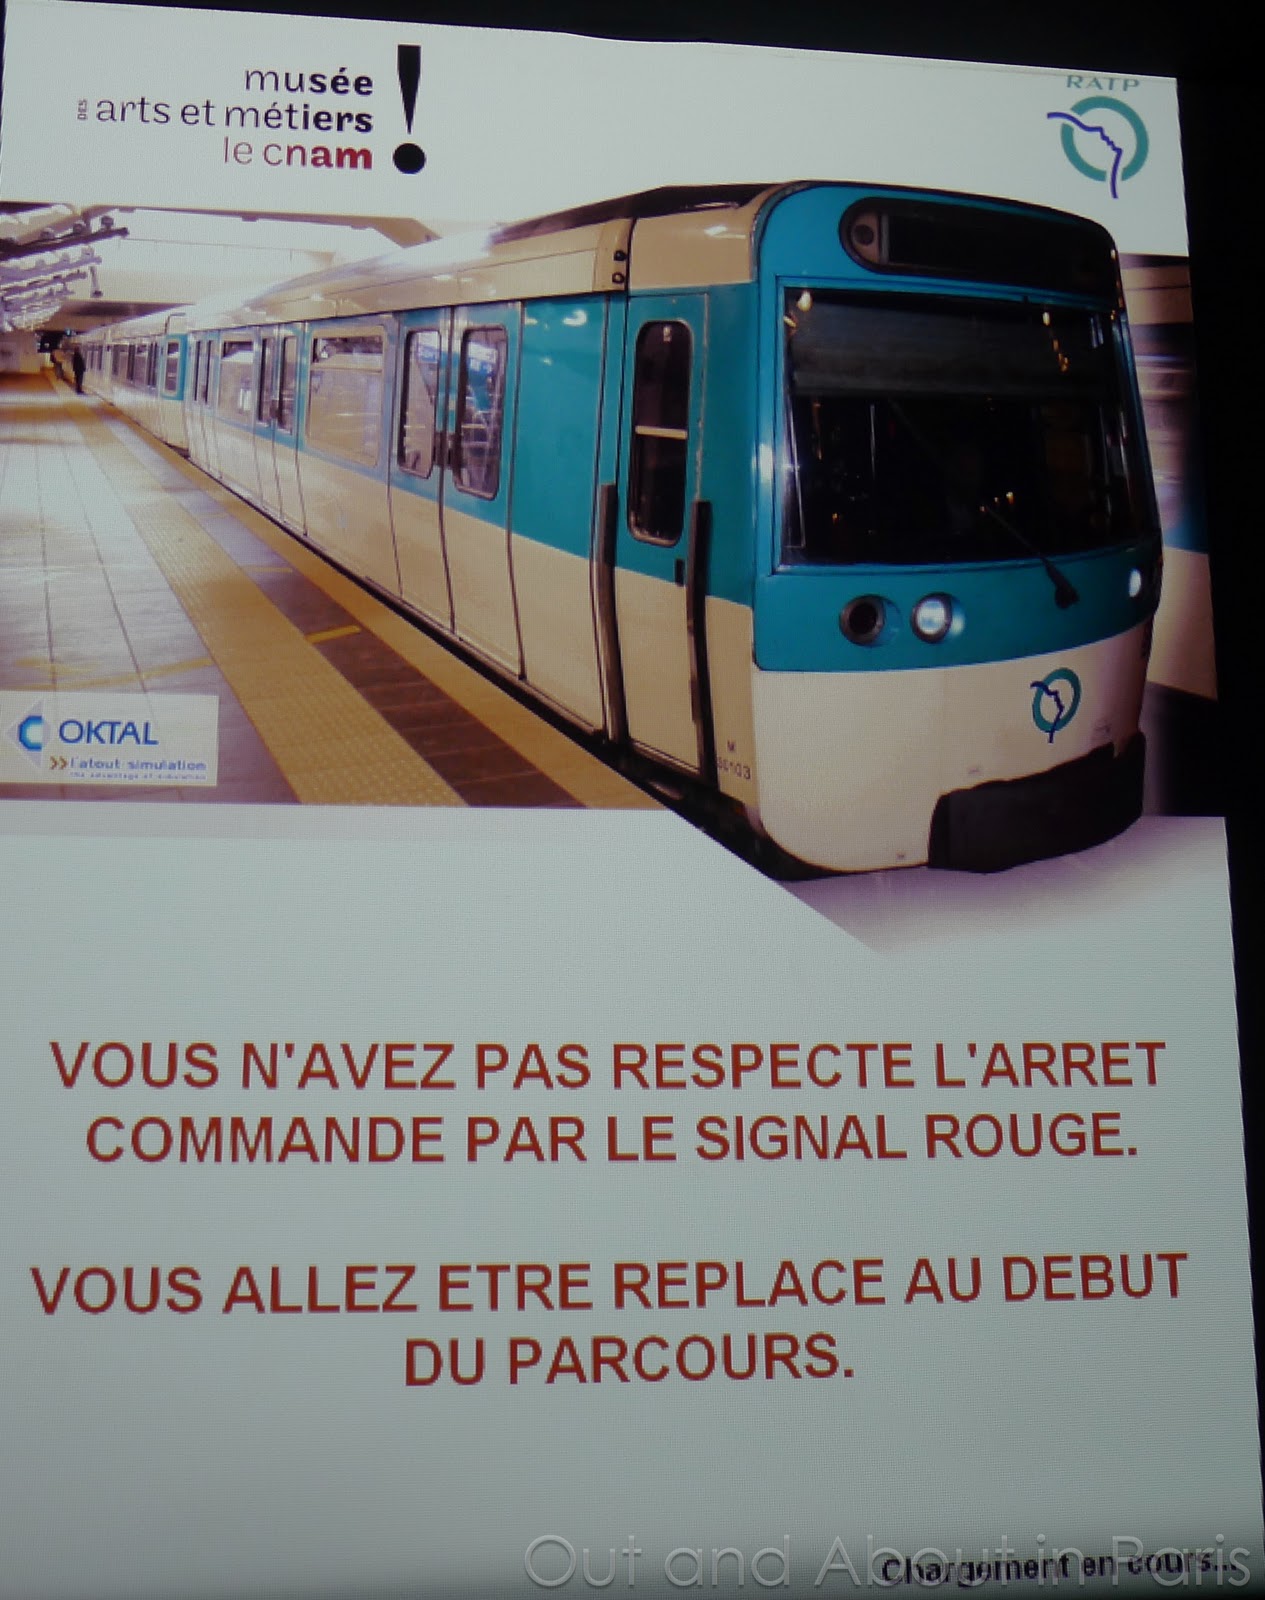 How to get to Louis Vuitton Paris Montaigne by Bus, Metro, Train, RER or  Light Rail?